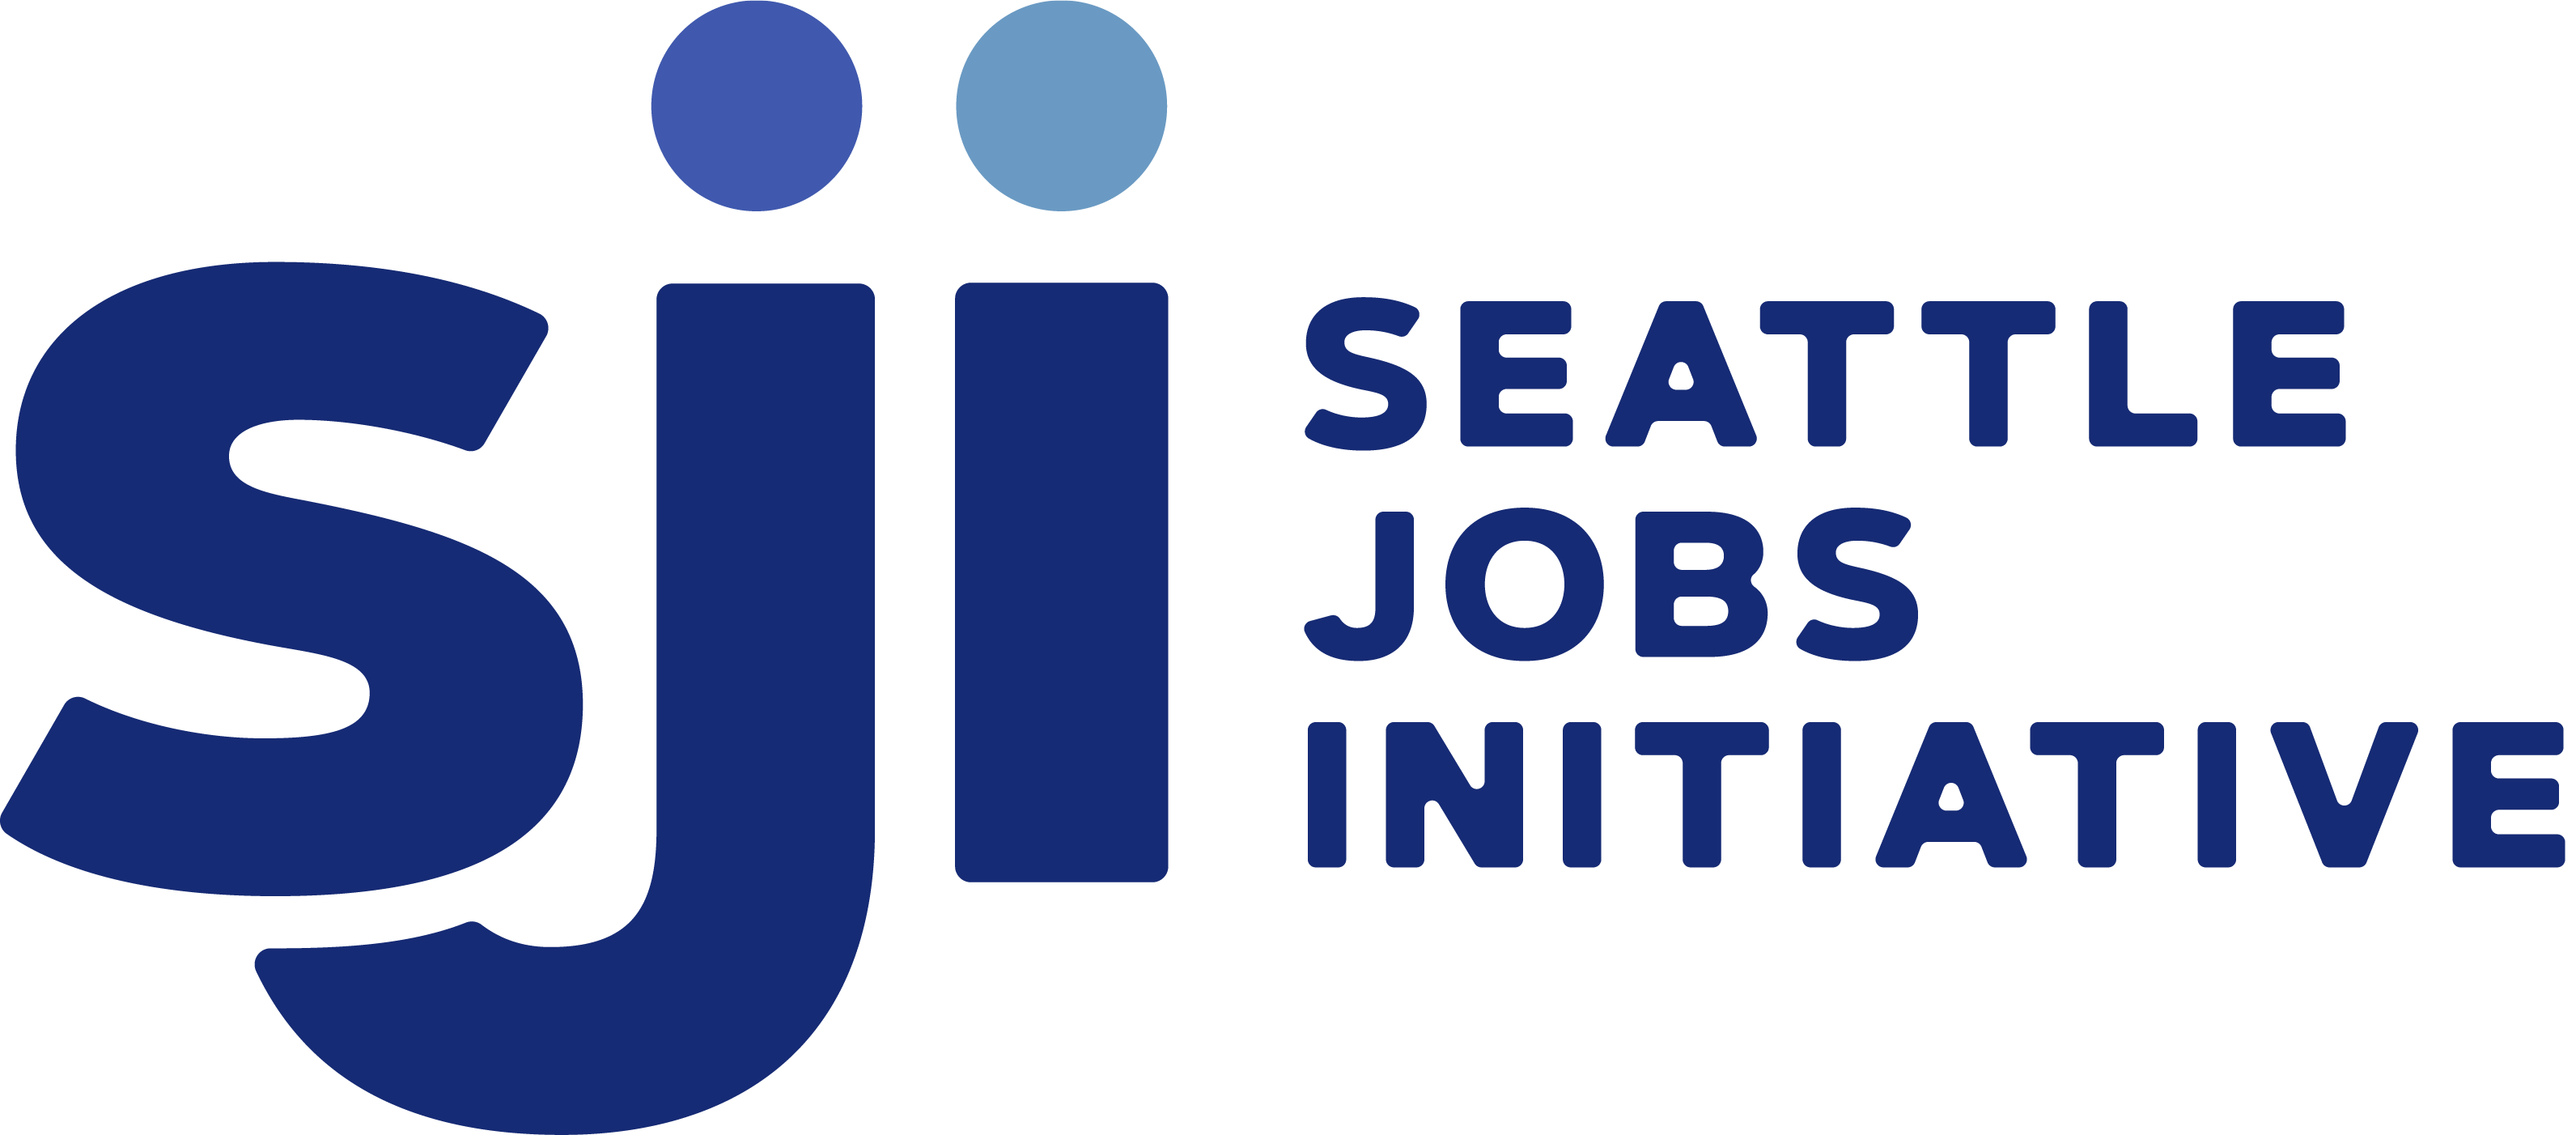 Seattle Jobs Initiative logo